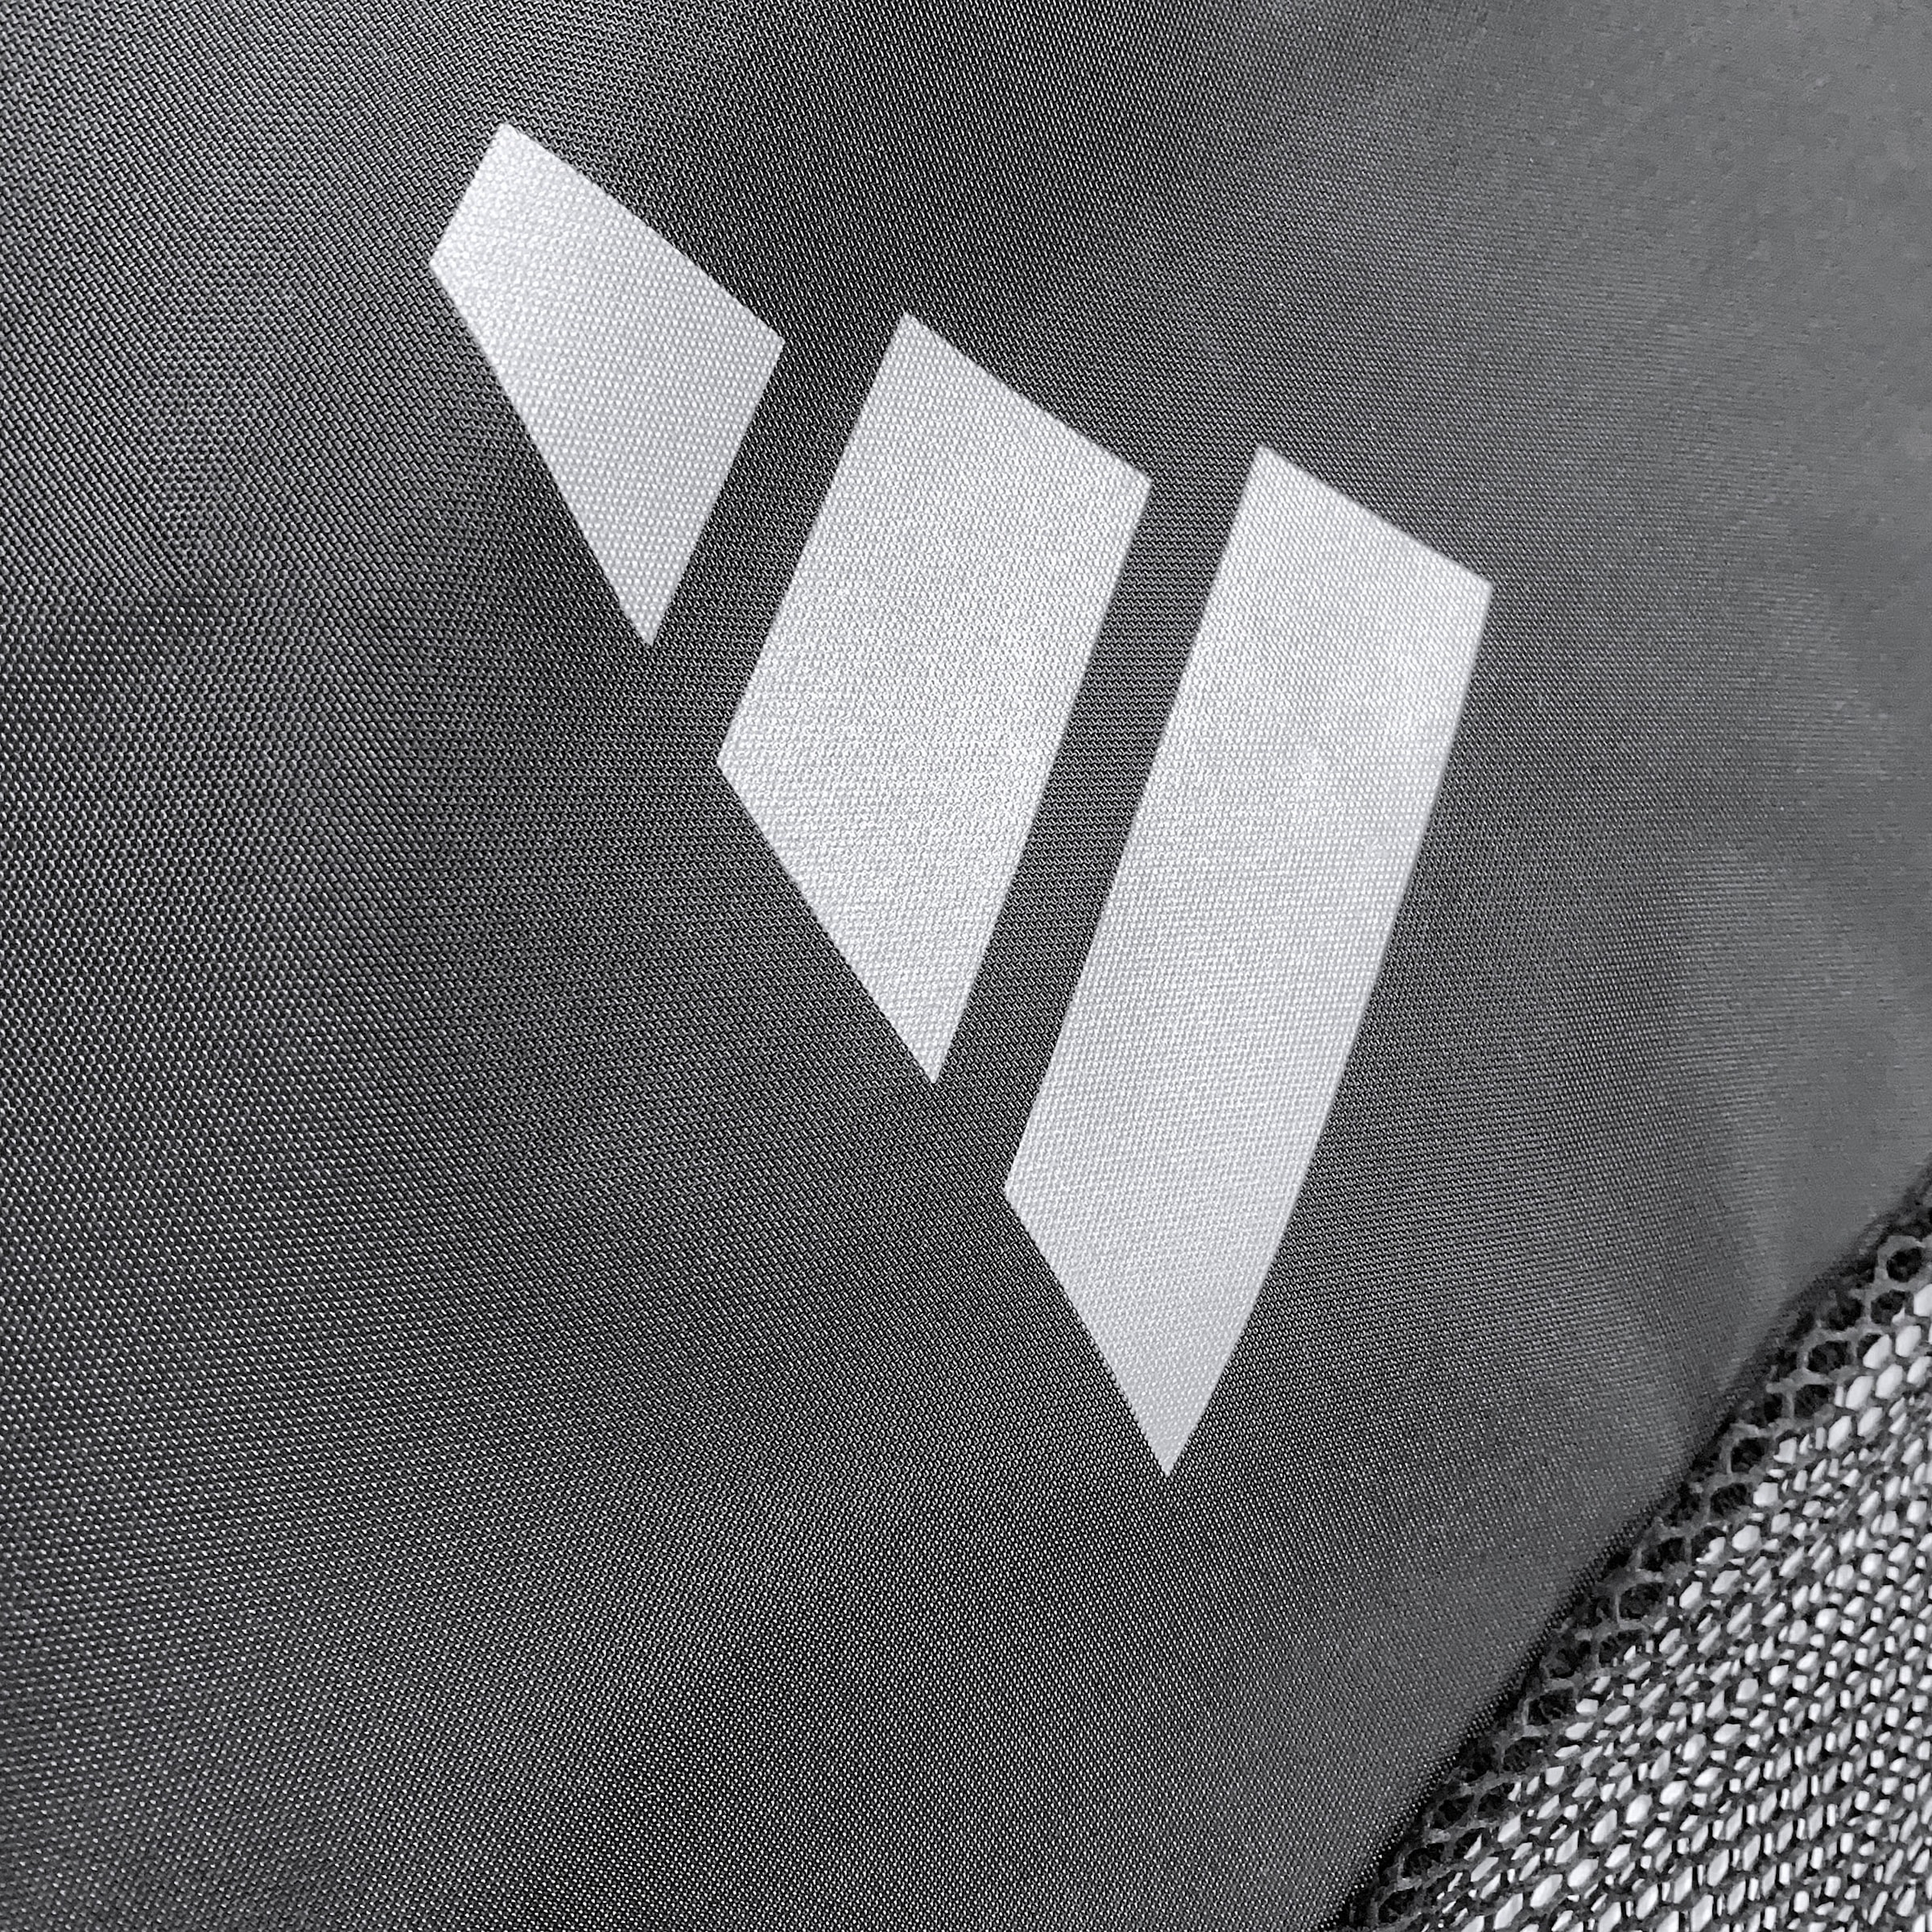 adidas Performance Sportrucksack »Laundry Bag«